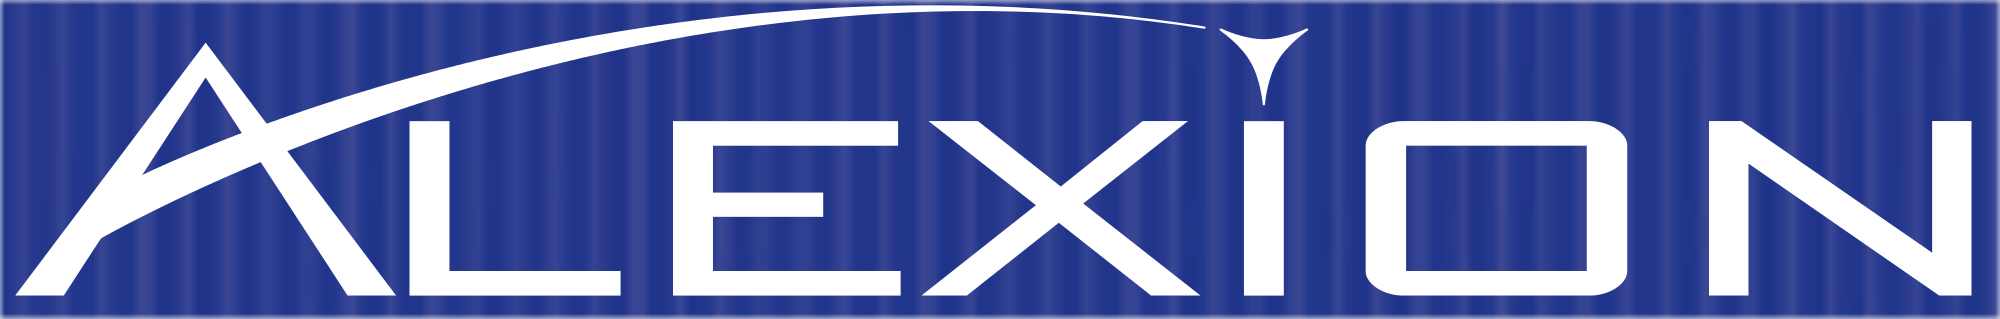 Alexion Logo - Alexion Pharmaceuticals Logo.svg